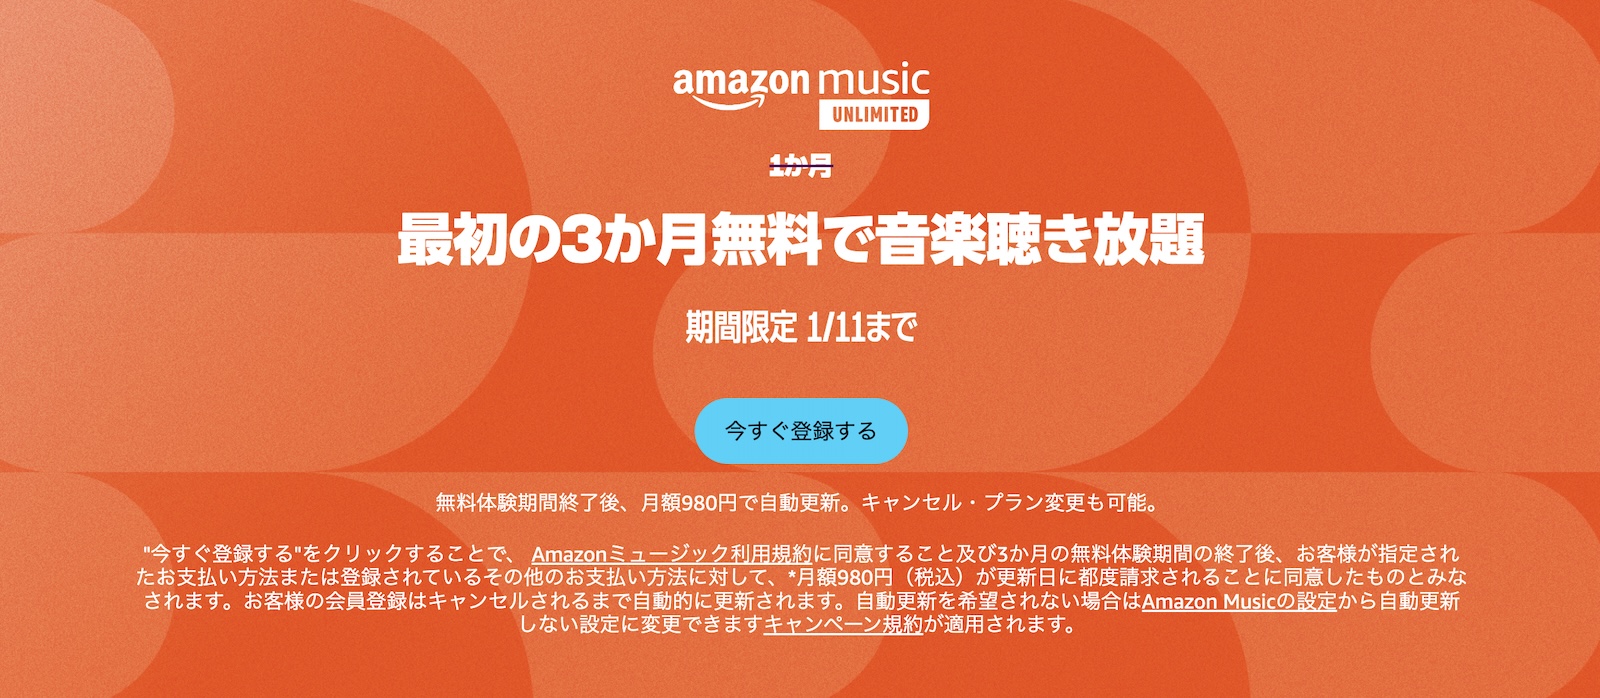 Amazon Music Unlimited Campaign 20231115